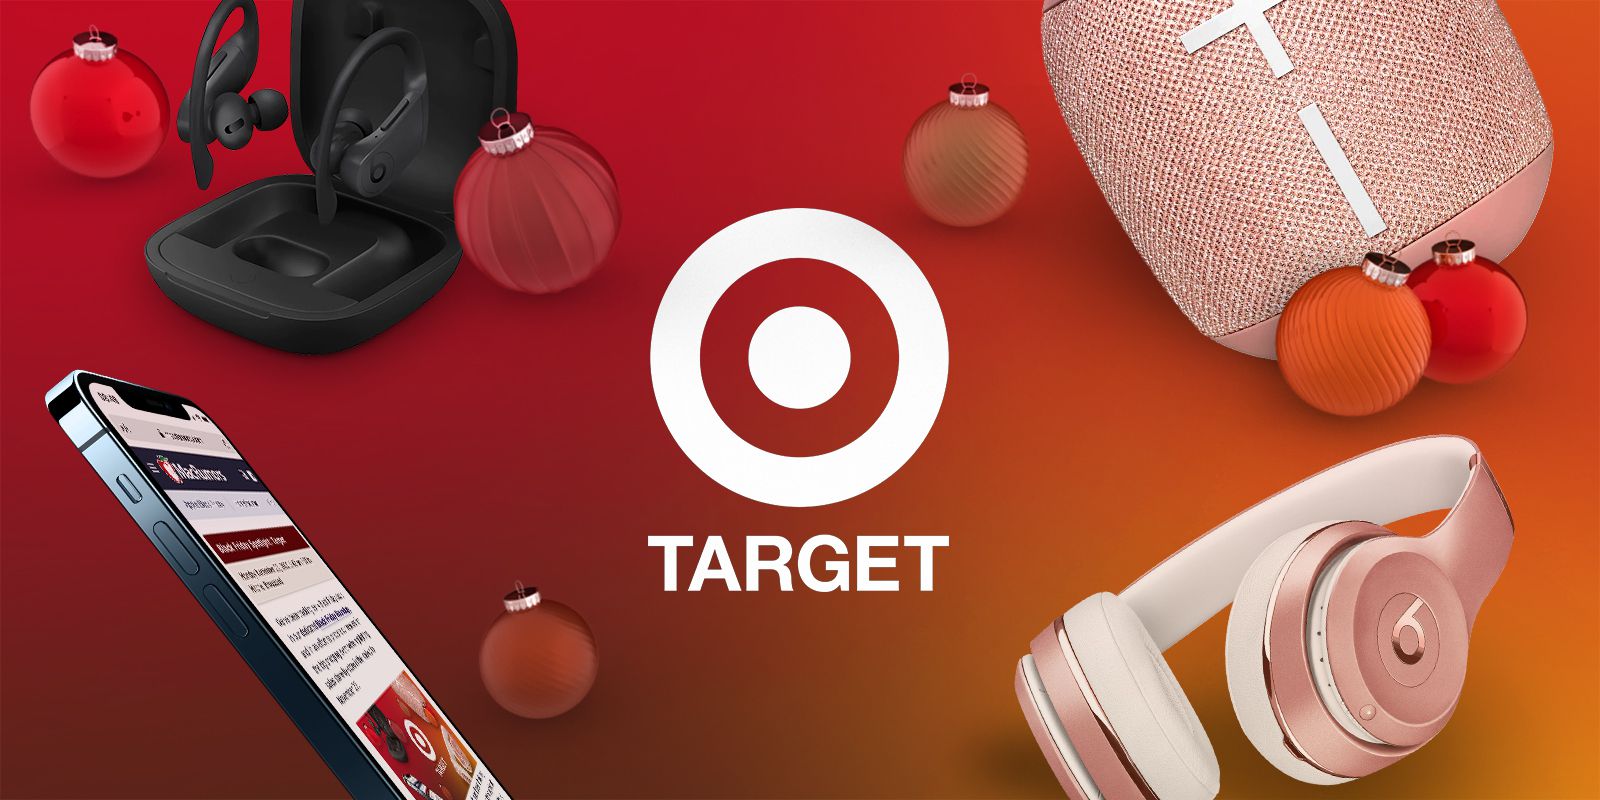 Target Reveals Black Friday Plans With Week-Long Sales Starting November 20 - macrumors.com